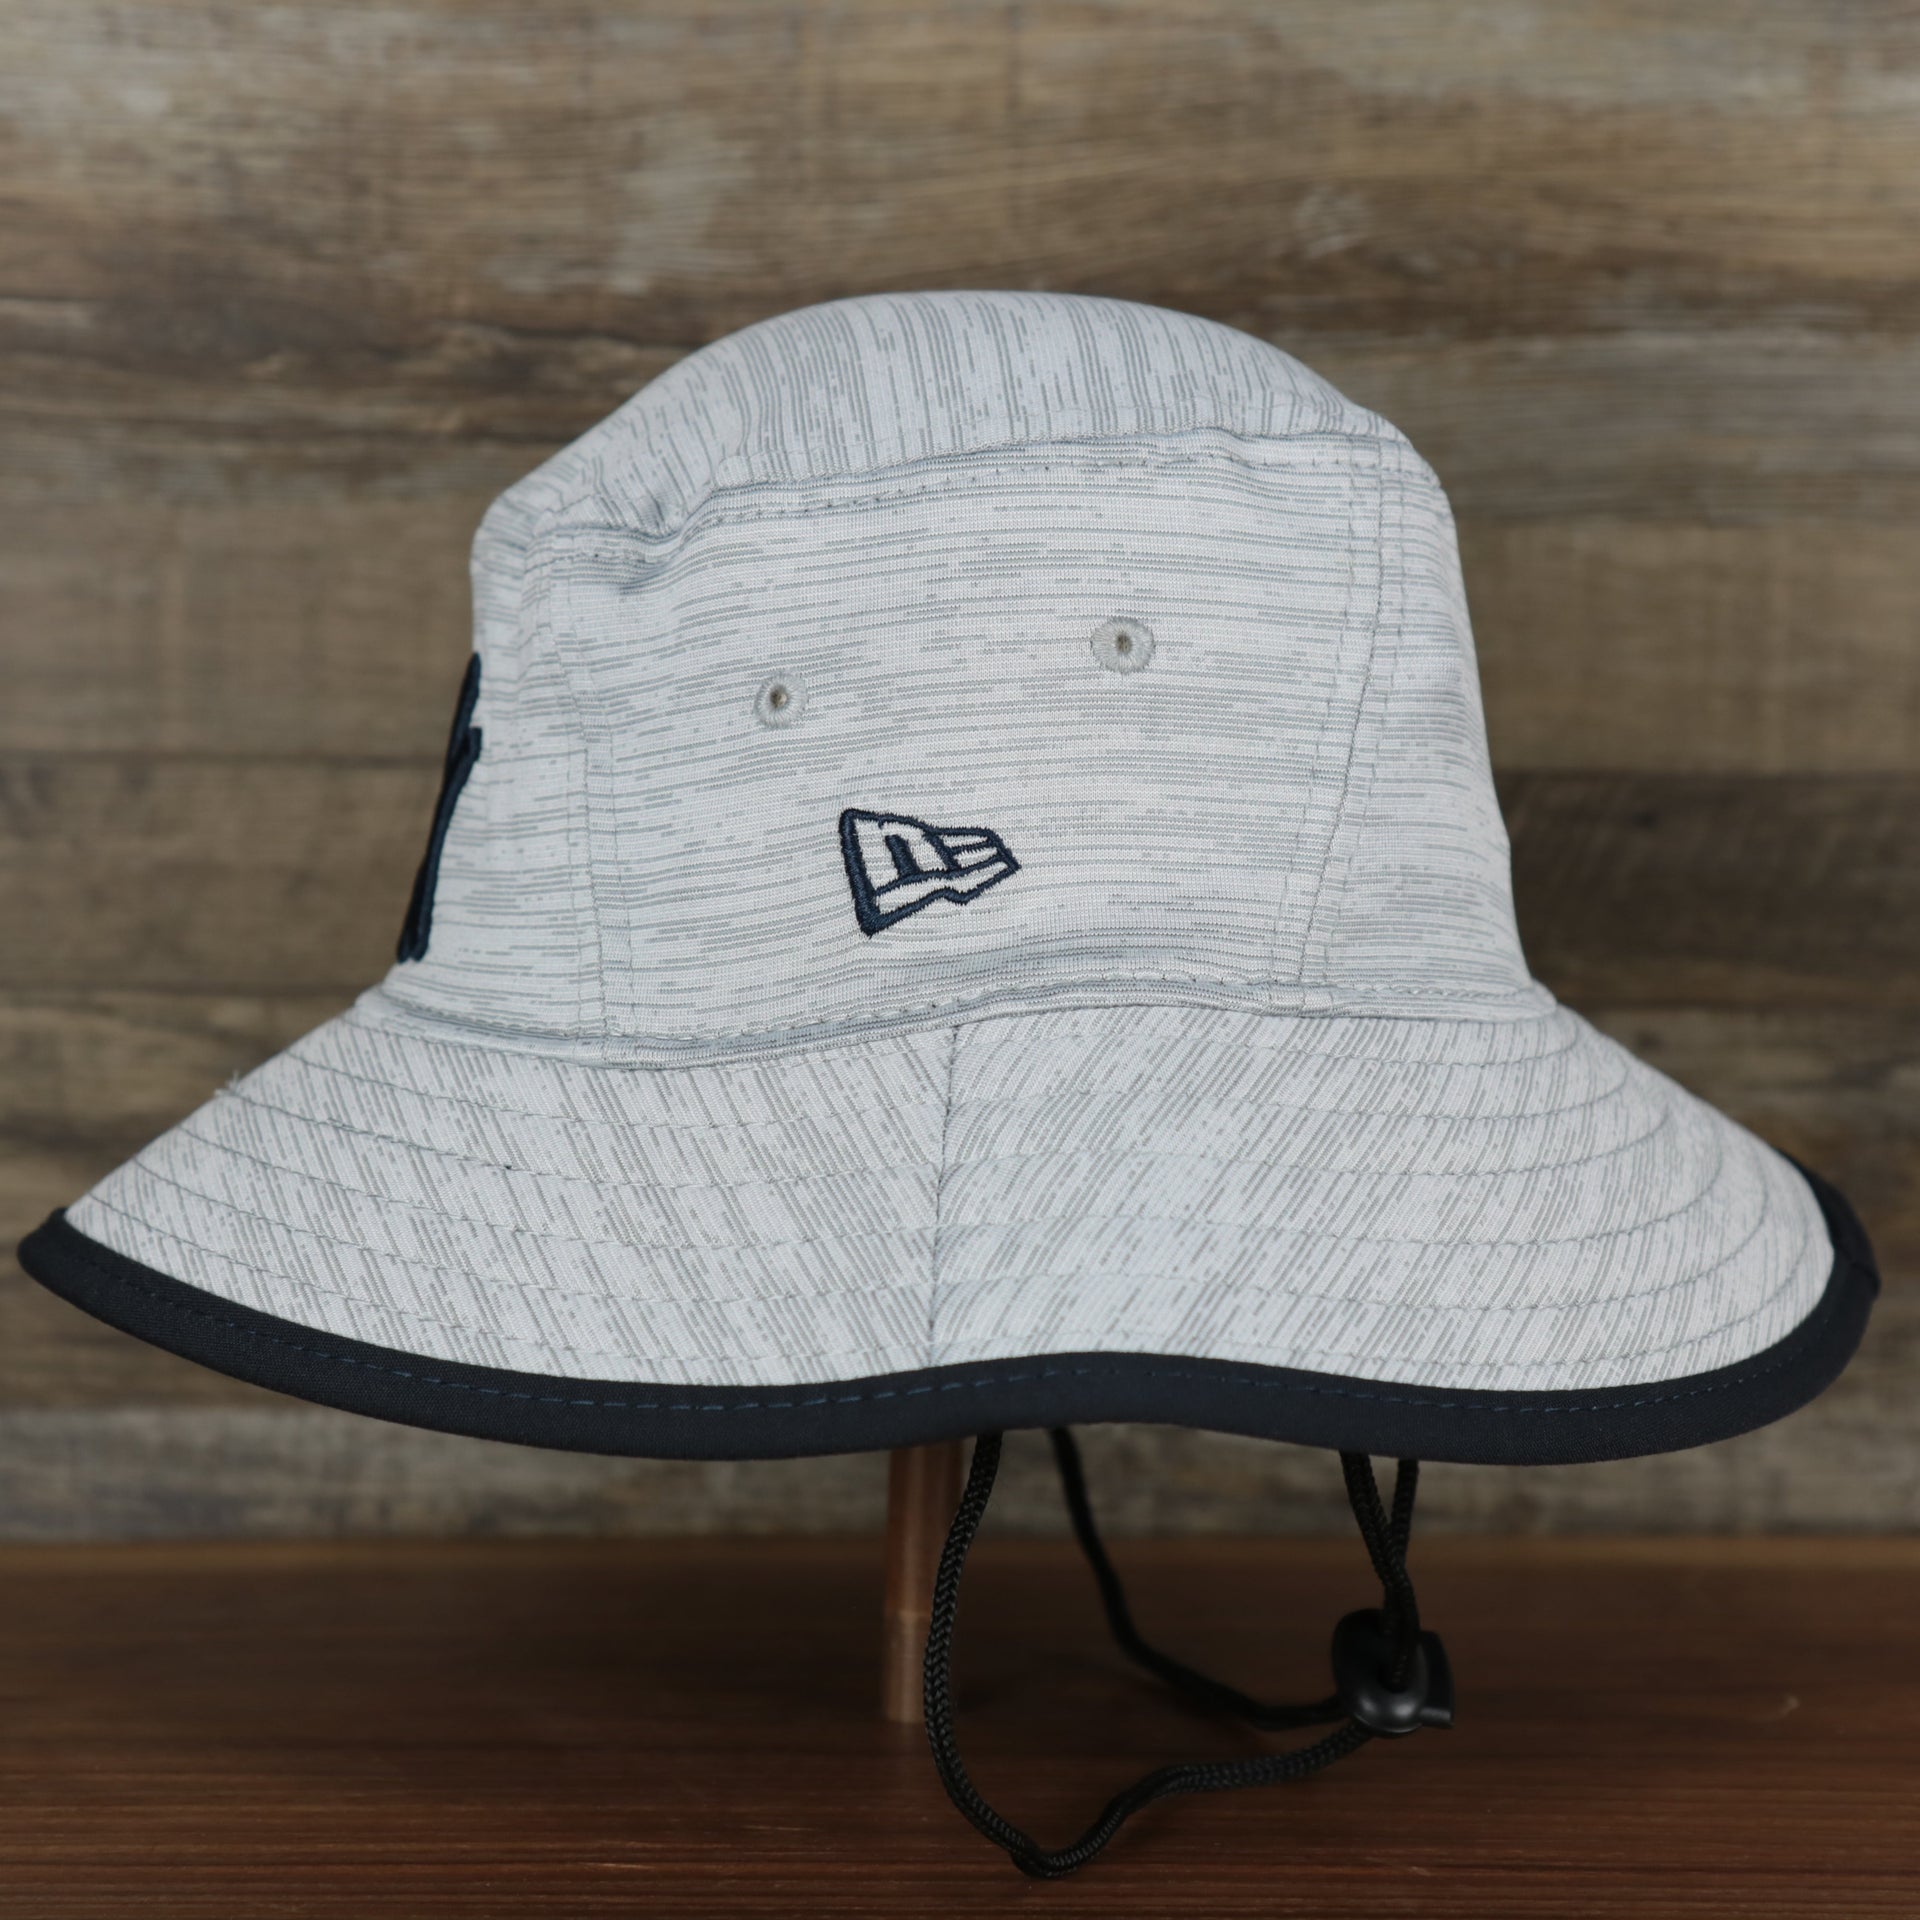 The wearer's left on the New York Yankees New Era Bucket Hat